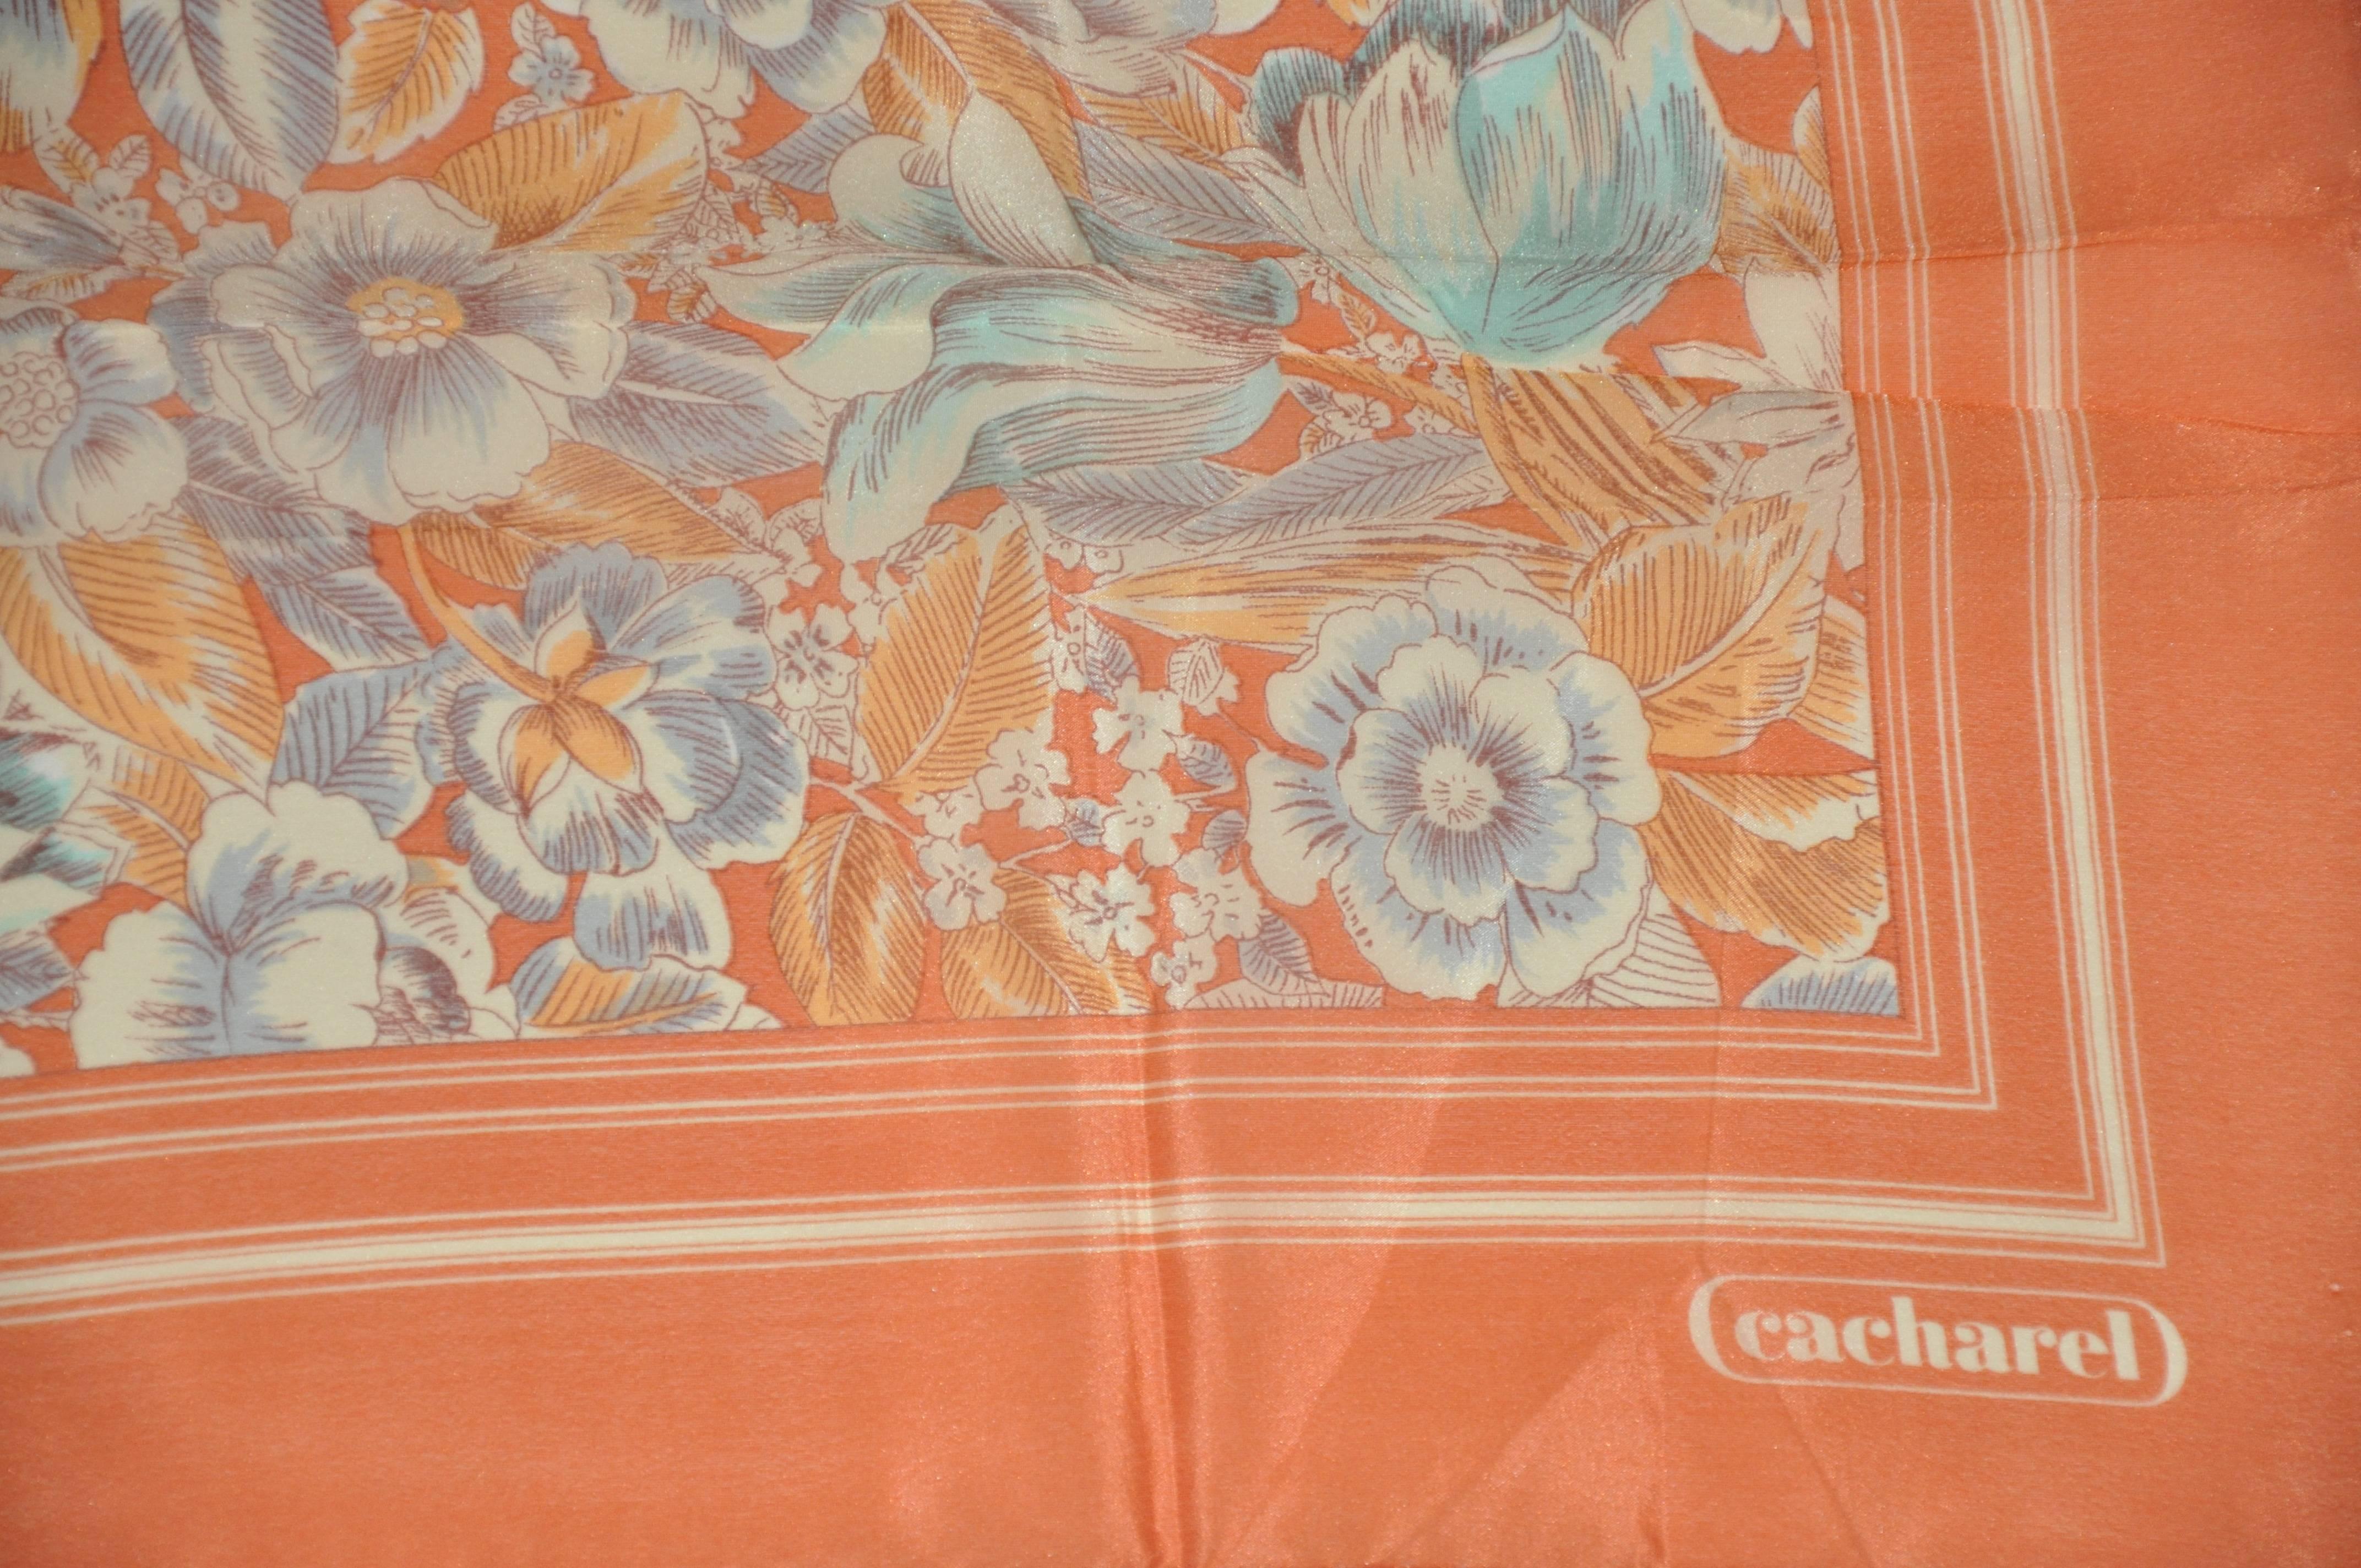 Cacharel wonderful tangerine floral print scarf measures 30